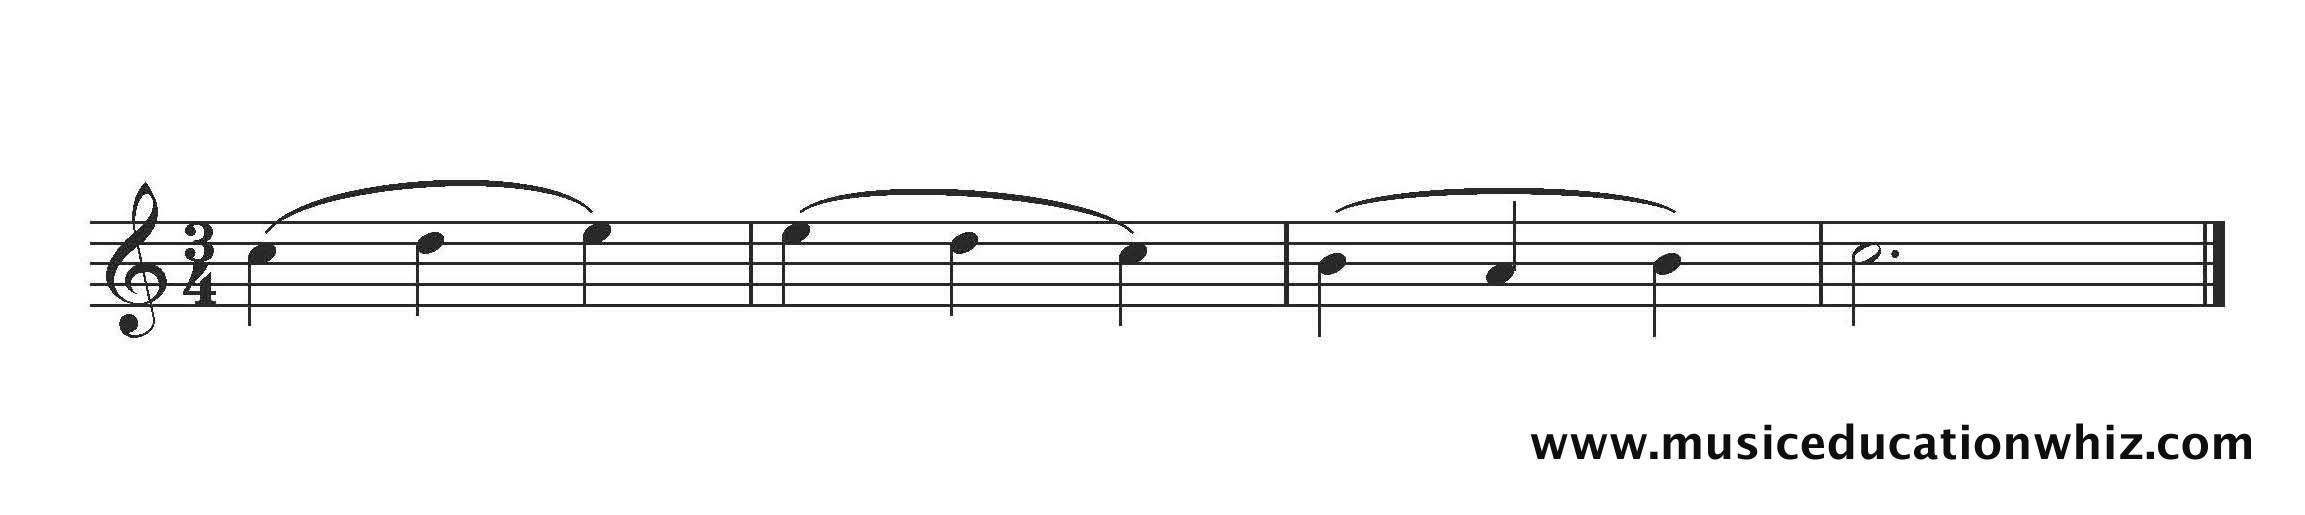 Passage of music with slurs